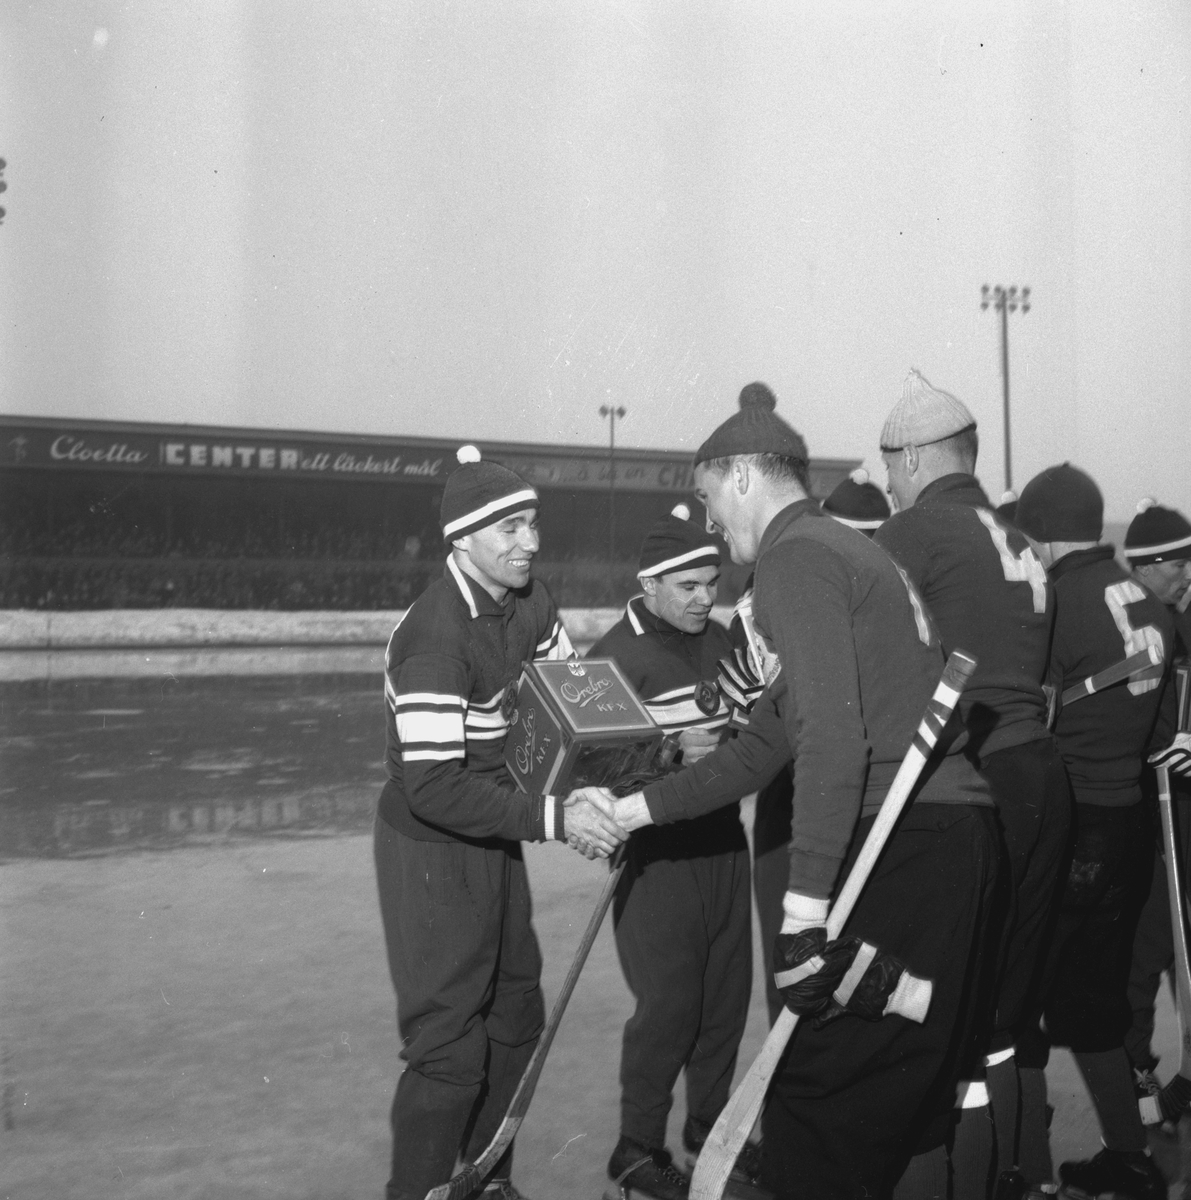 Bandy Närke - Ryssland.
26 februari 1959.